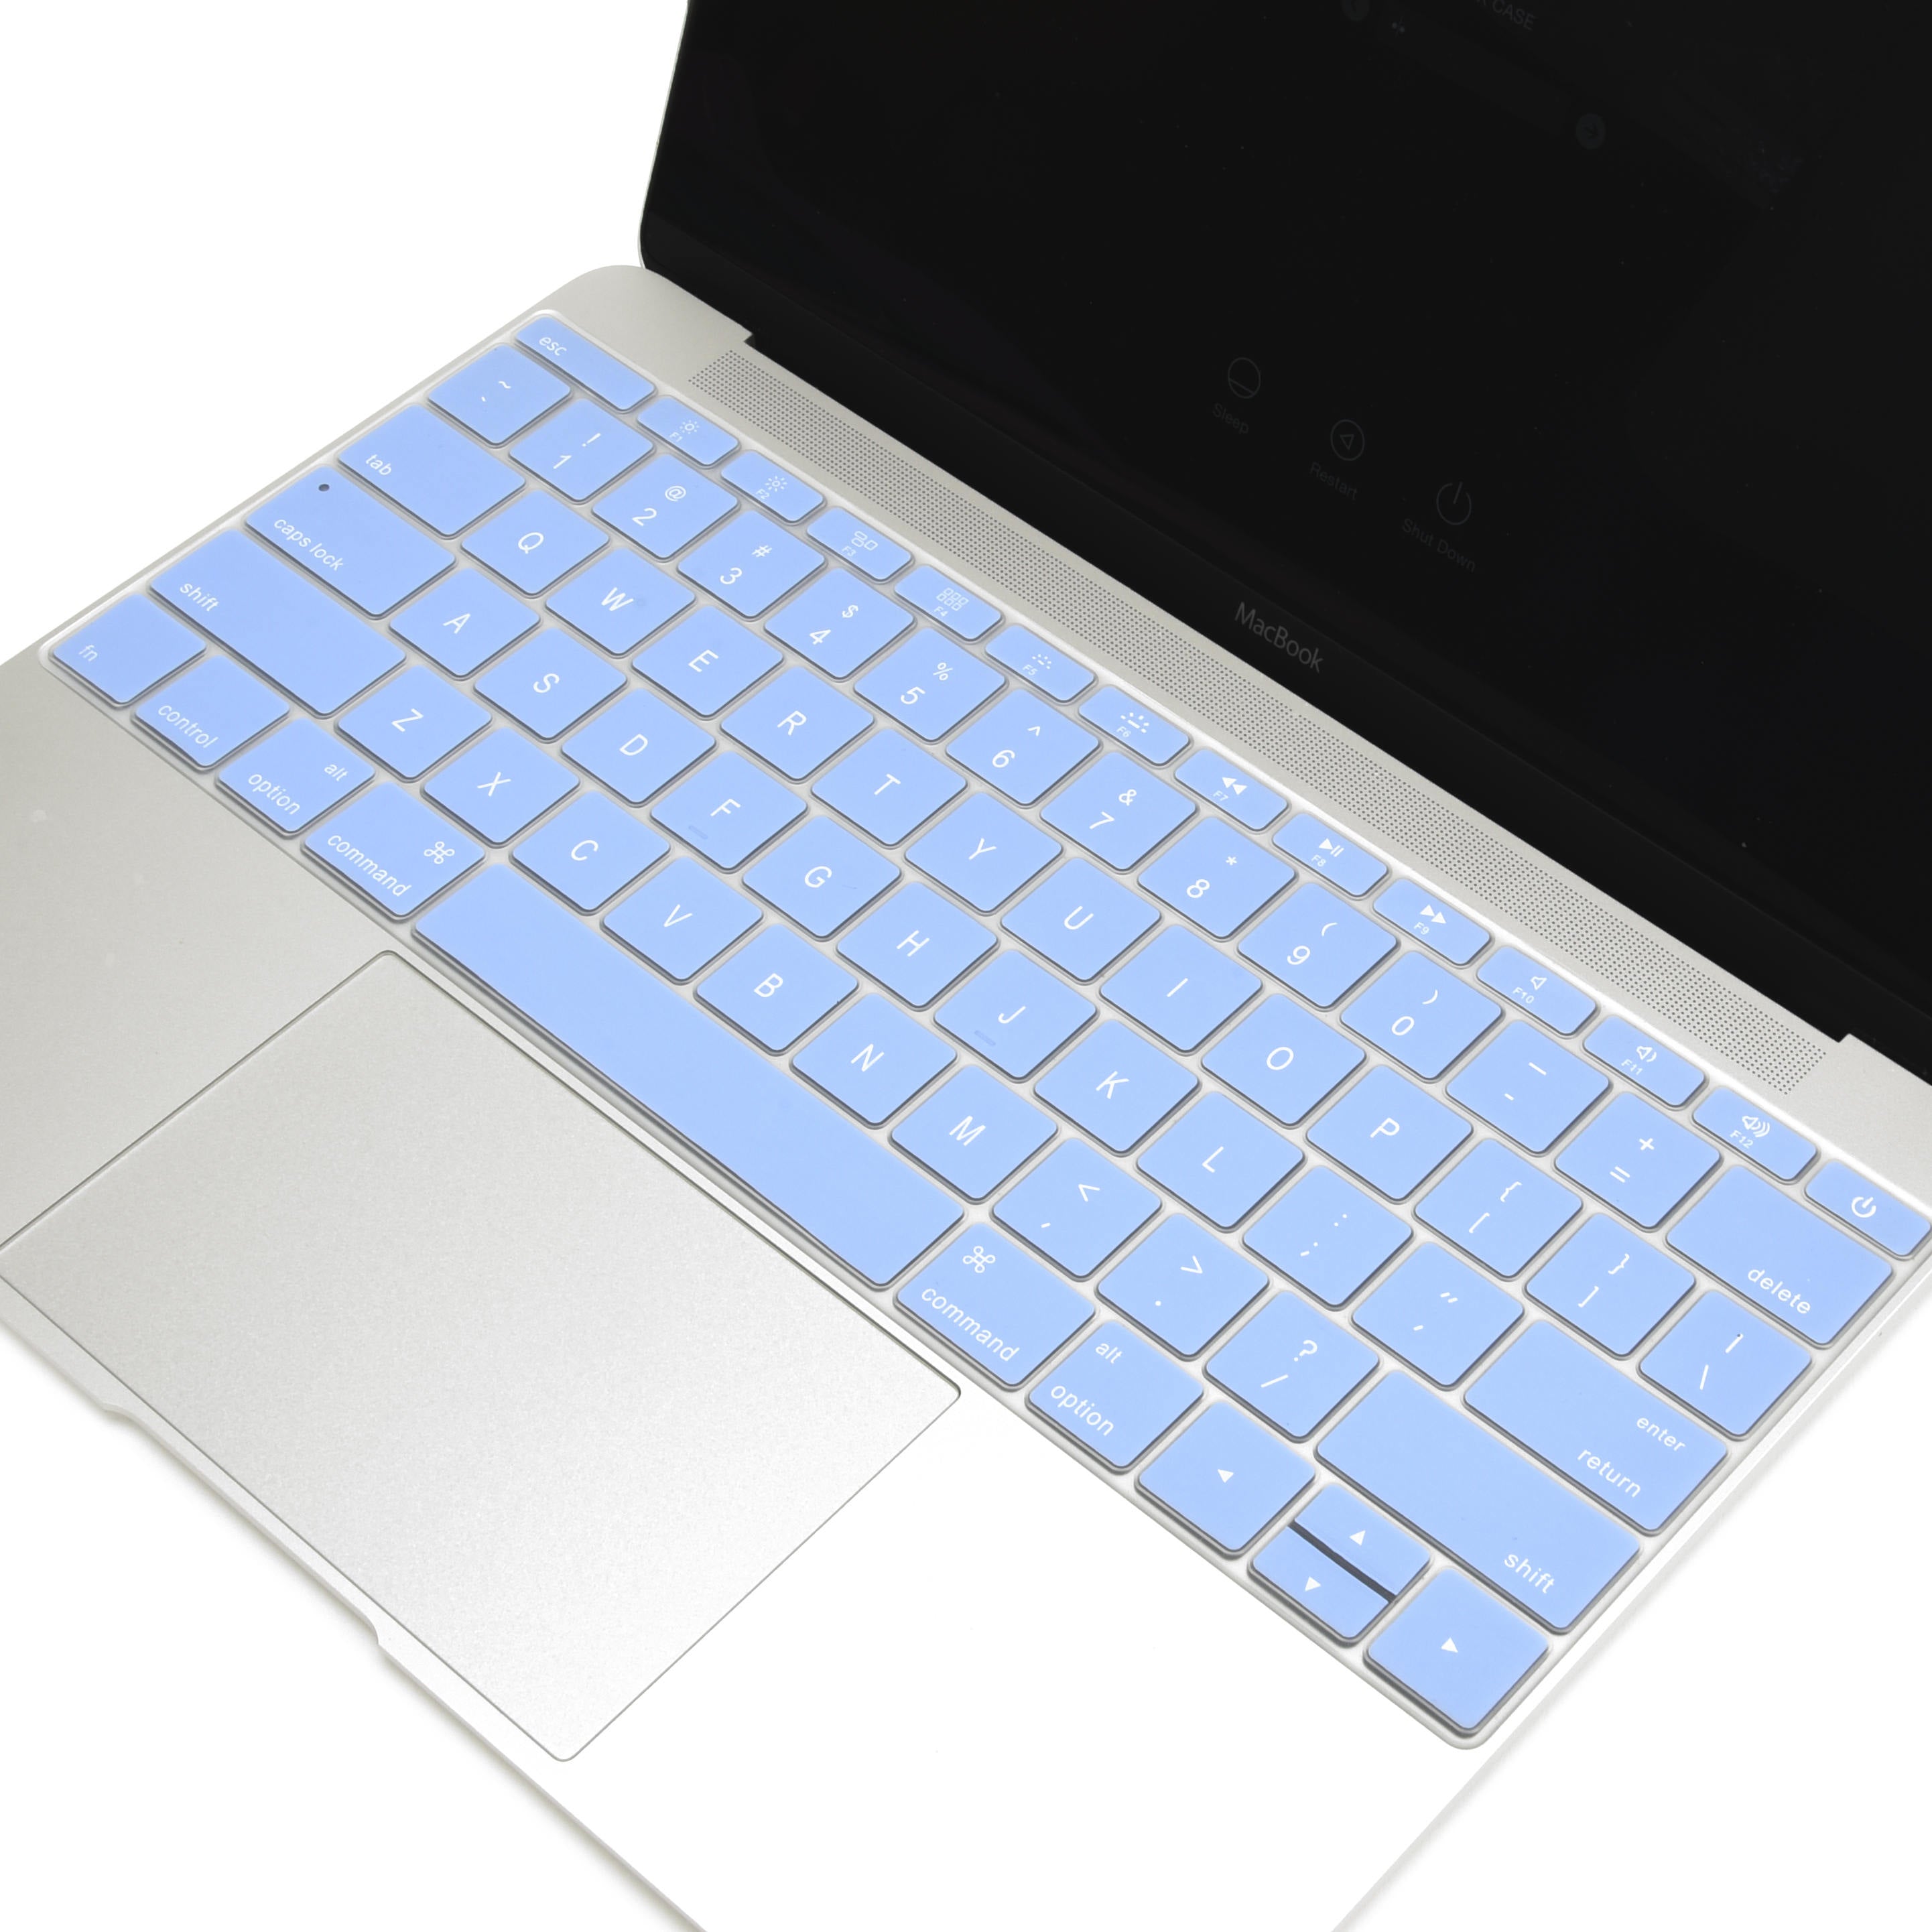 Macbook Case Set - Protective Deep Blue Clouded Marble - colourbanana